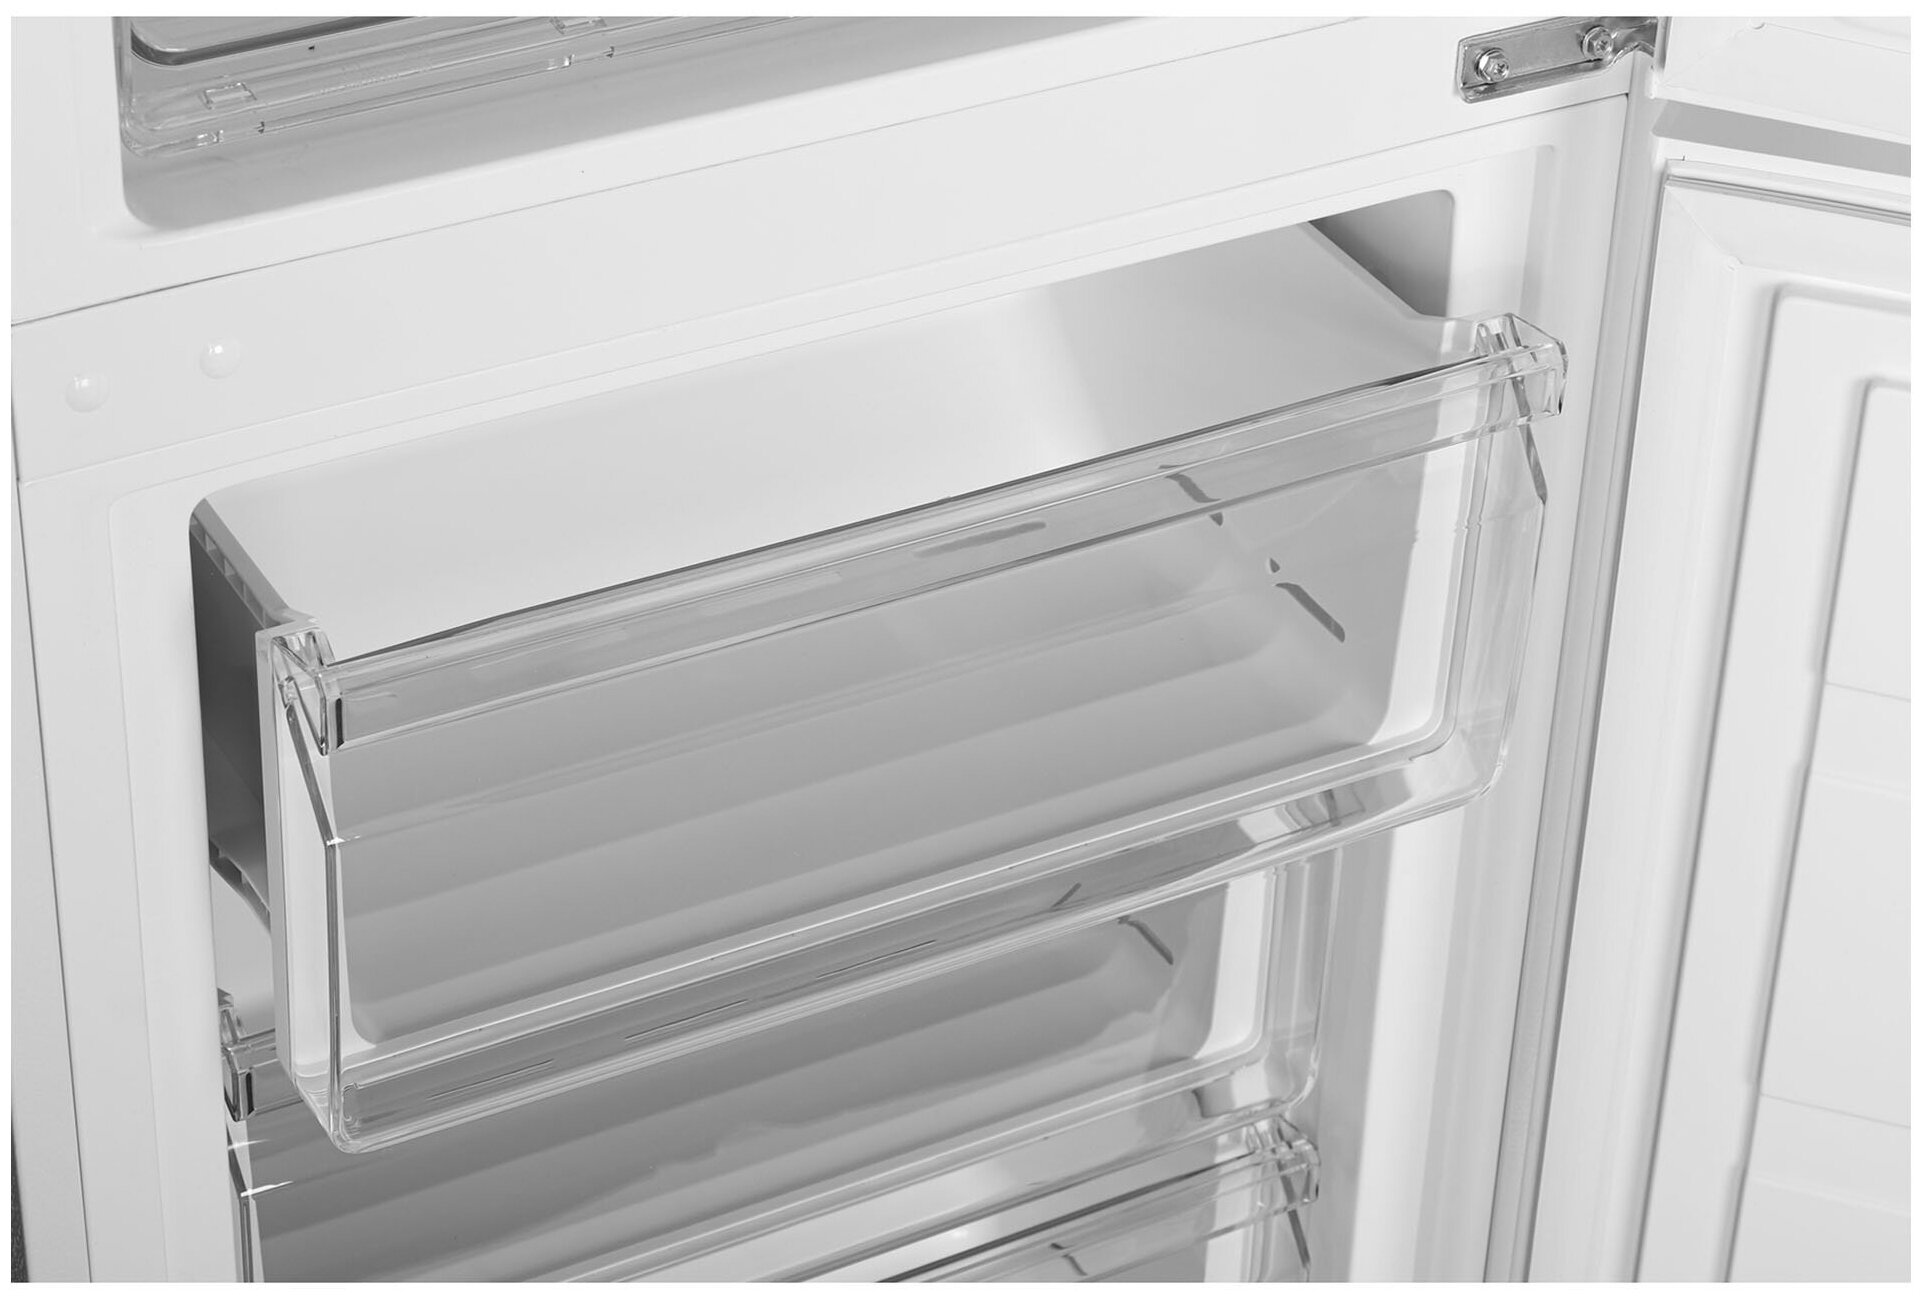 Холодильник Hyundai CC3095FWT белый